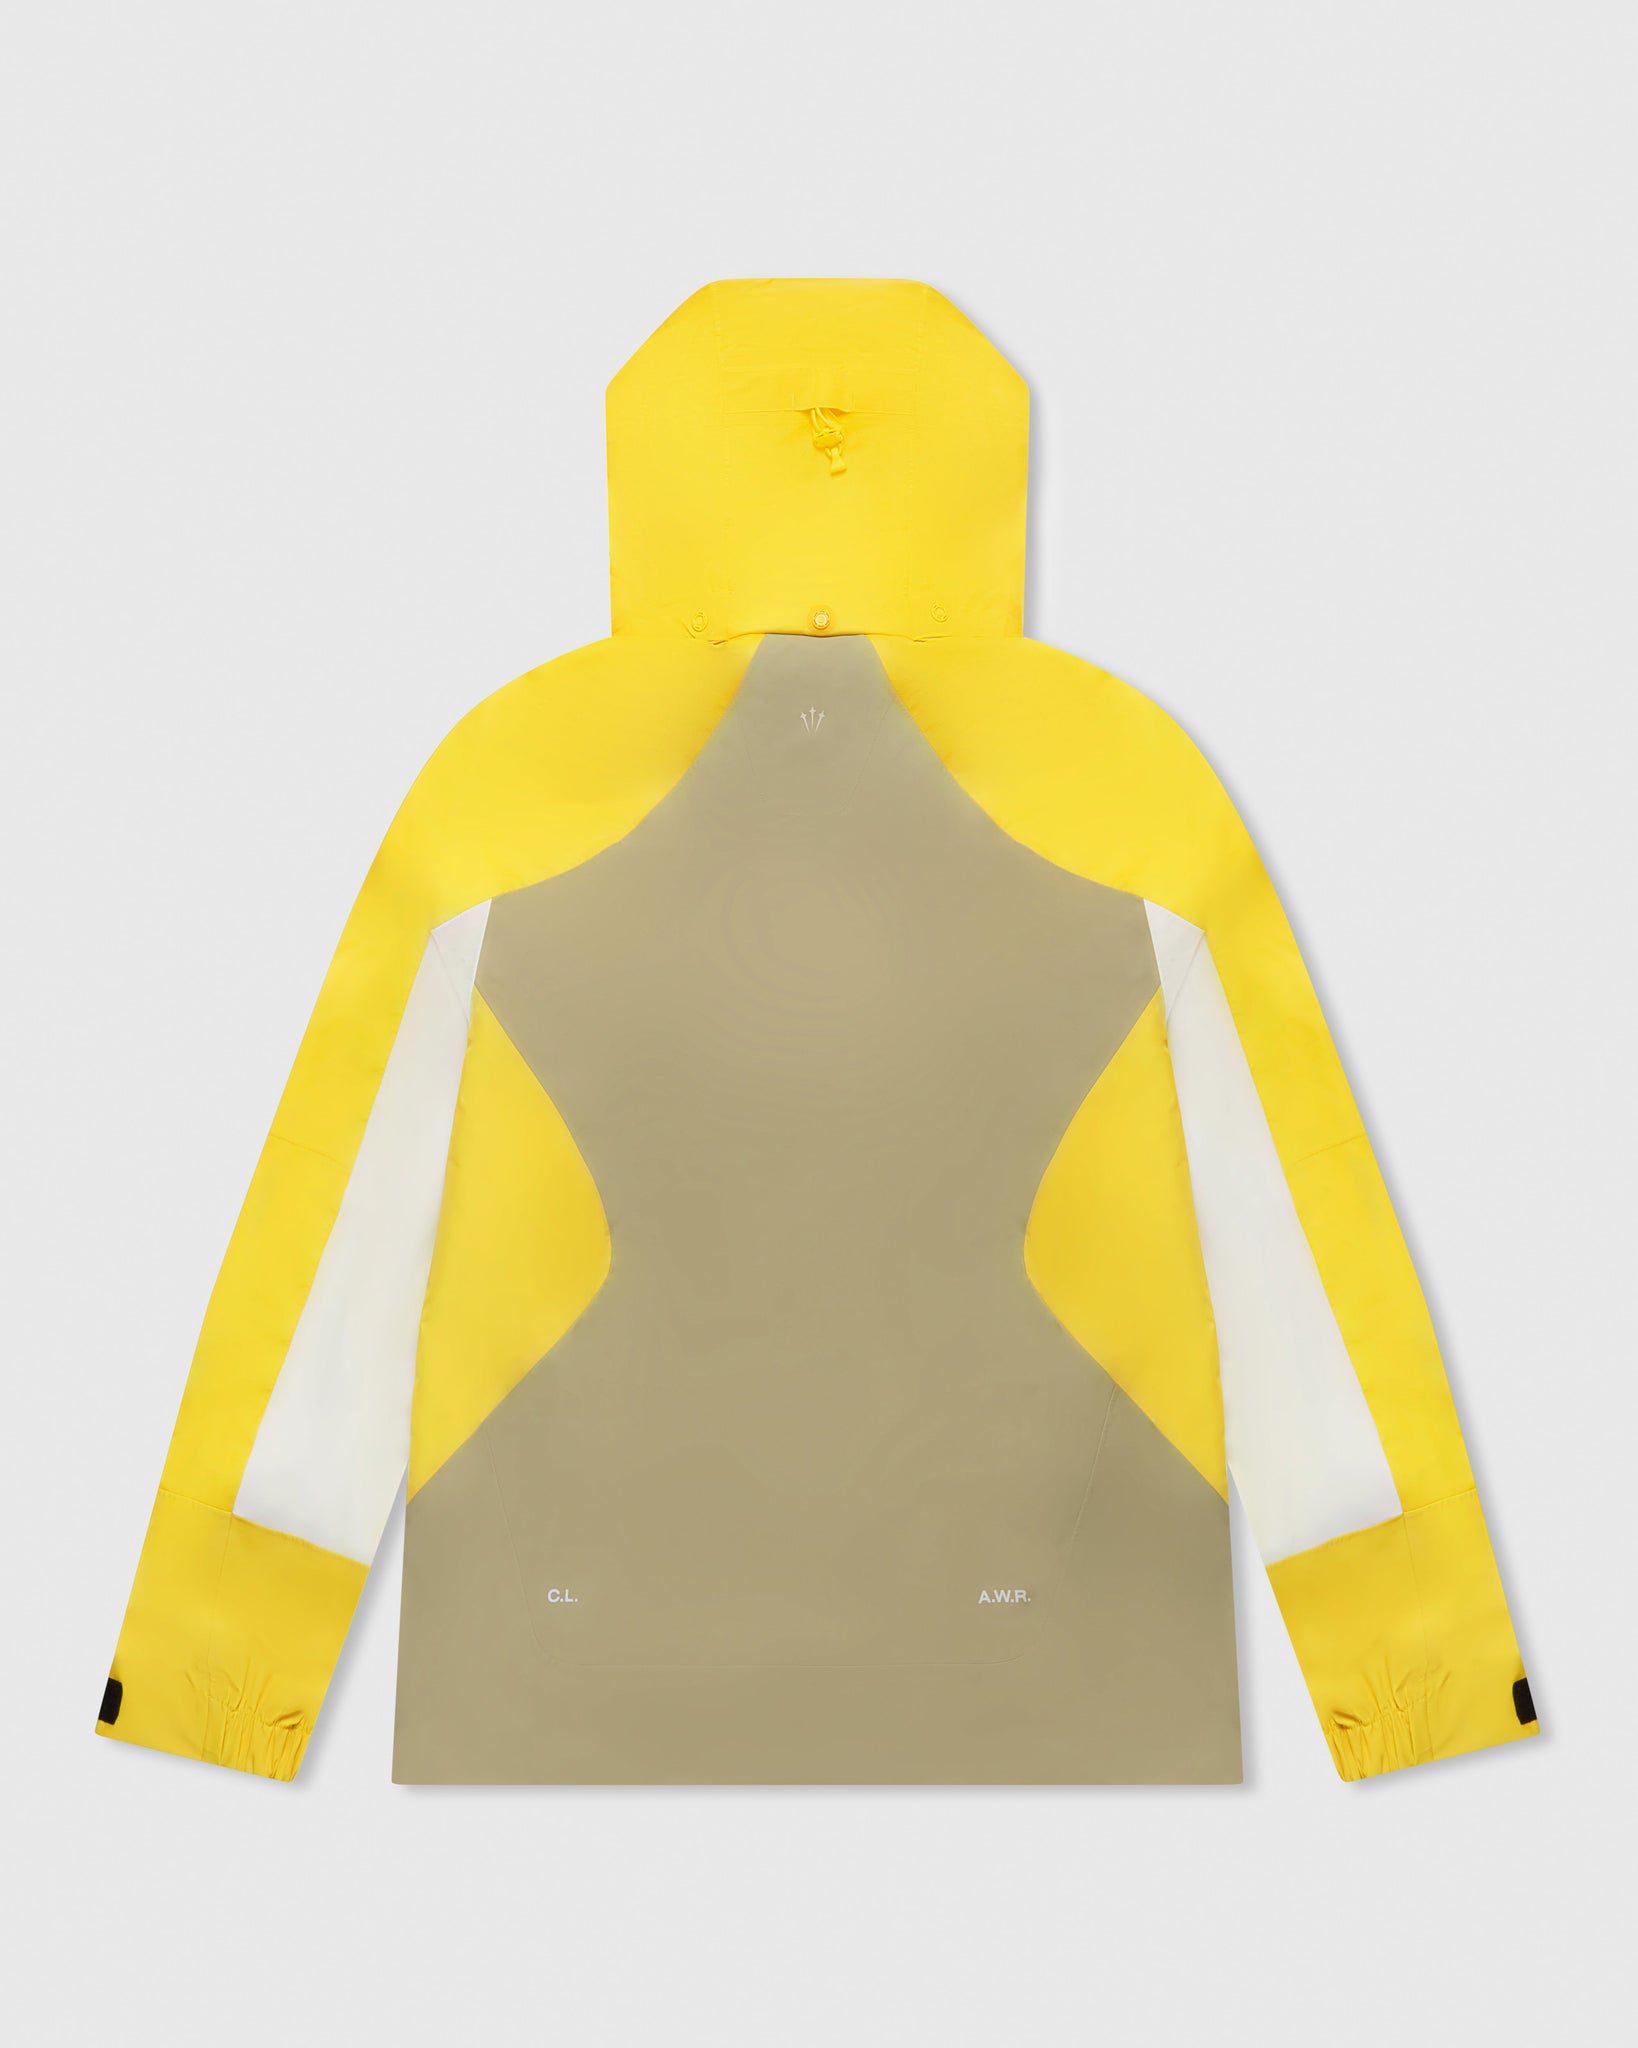 NOCTA x L'art Bala Tech Jacket - Khaki / Vivid Sulfur IMAGE #4